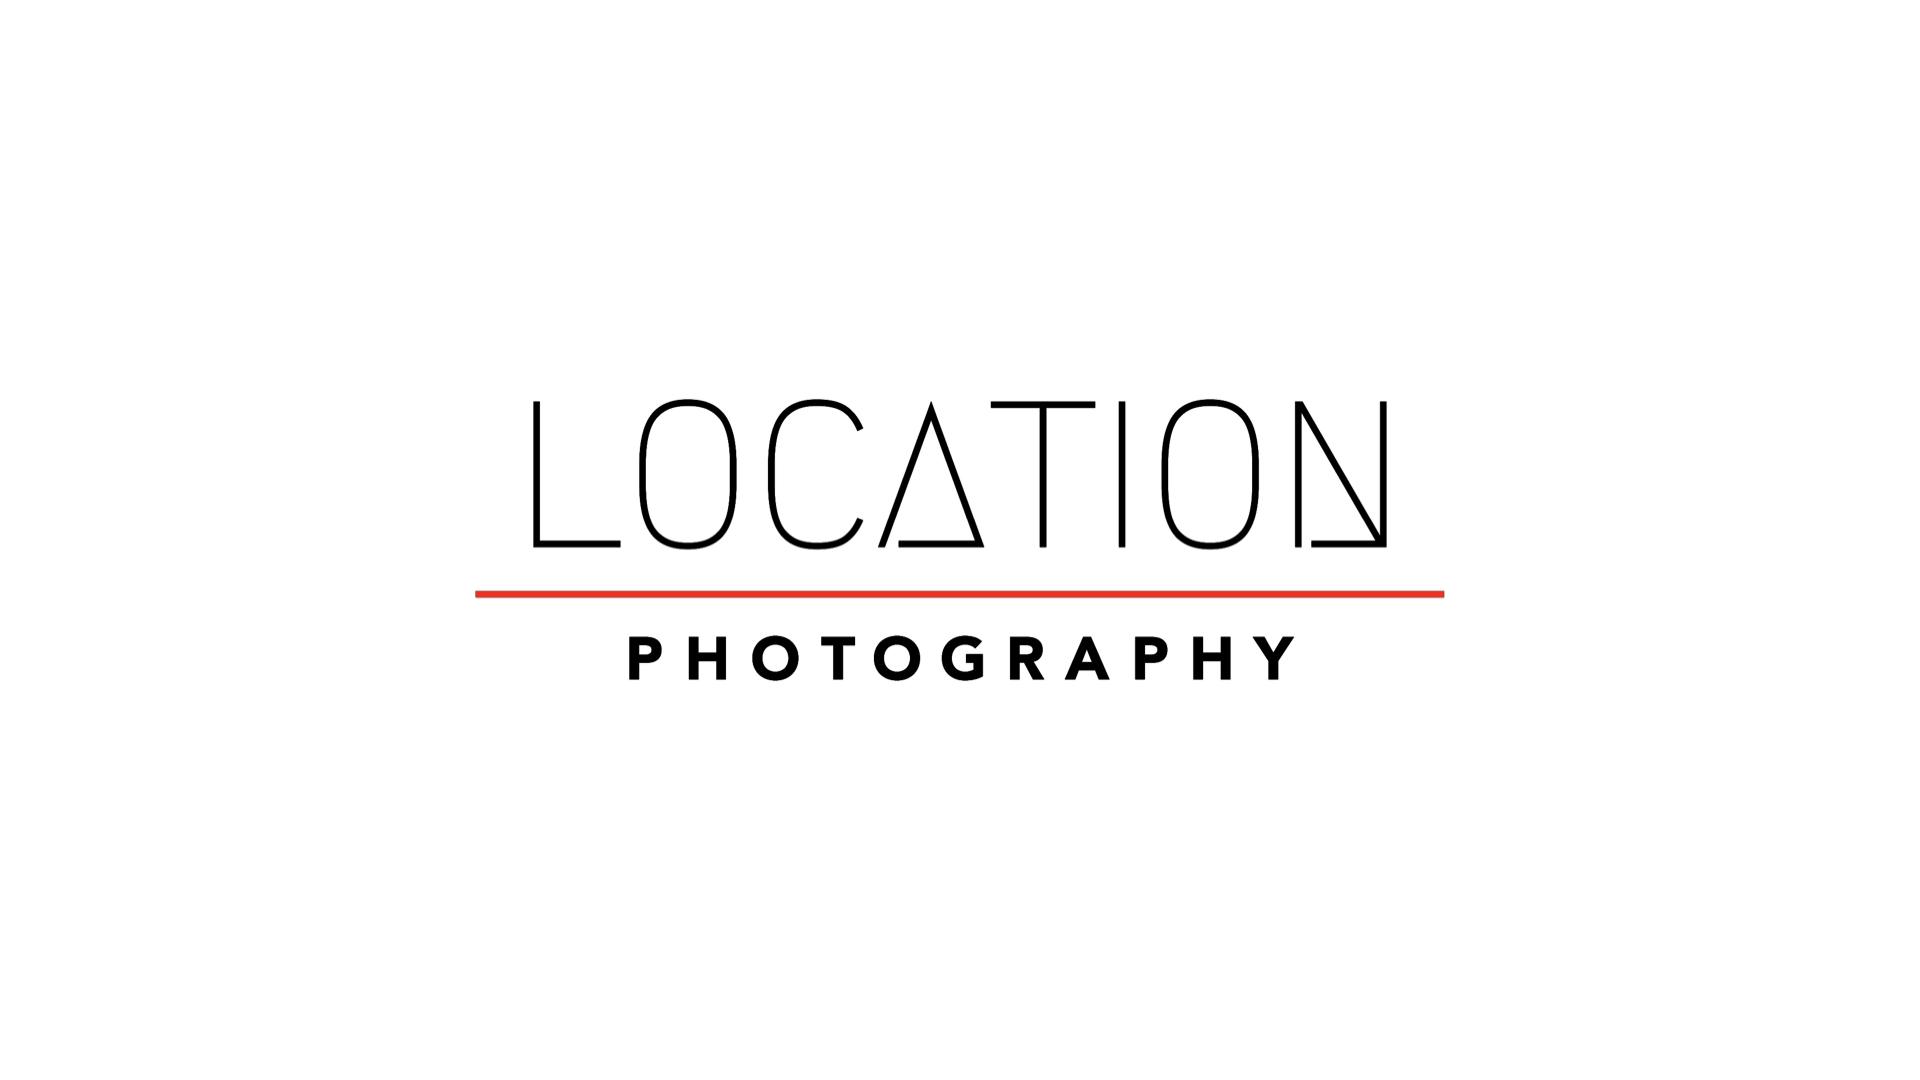 LOCATION PHOTOGRAPHY